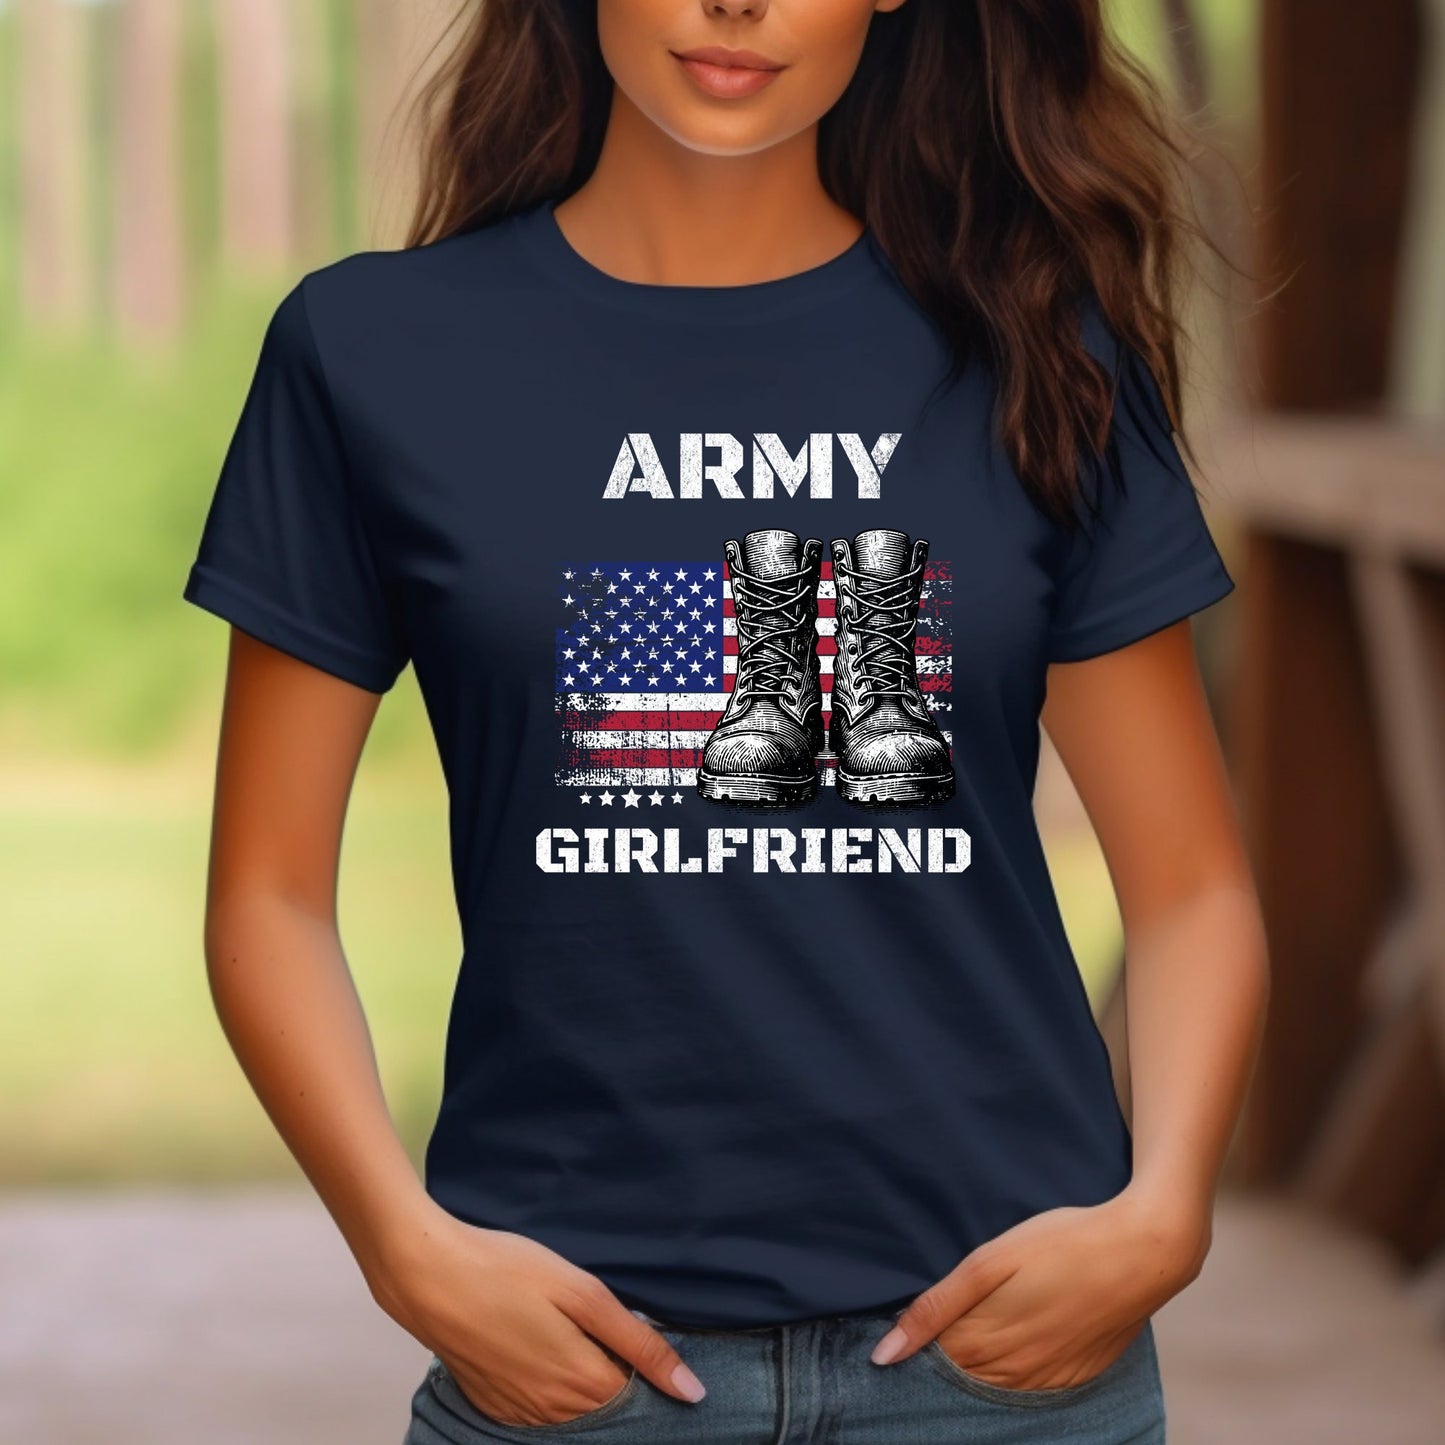 Army Girlfriend Vintage American Flag and Boots T-Shirt, Patriotic Military Shirt - Mardonyx T-Shirt XS / Navy